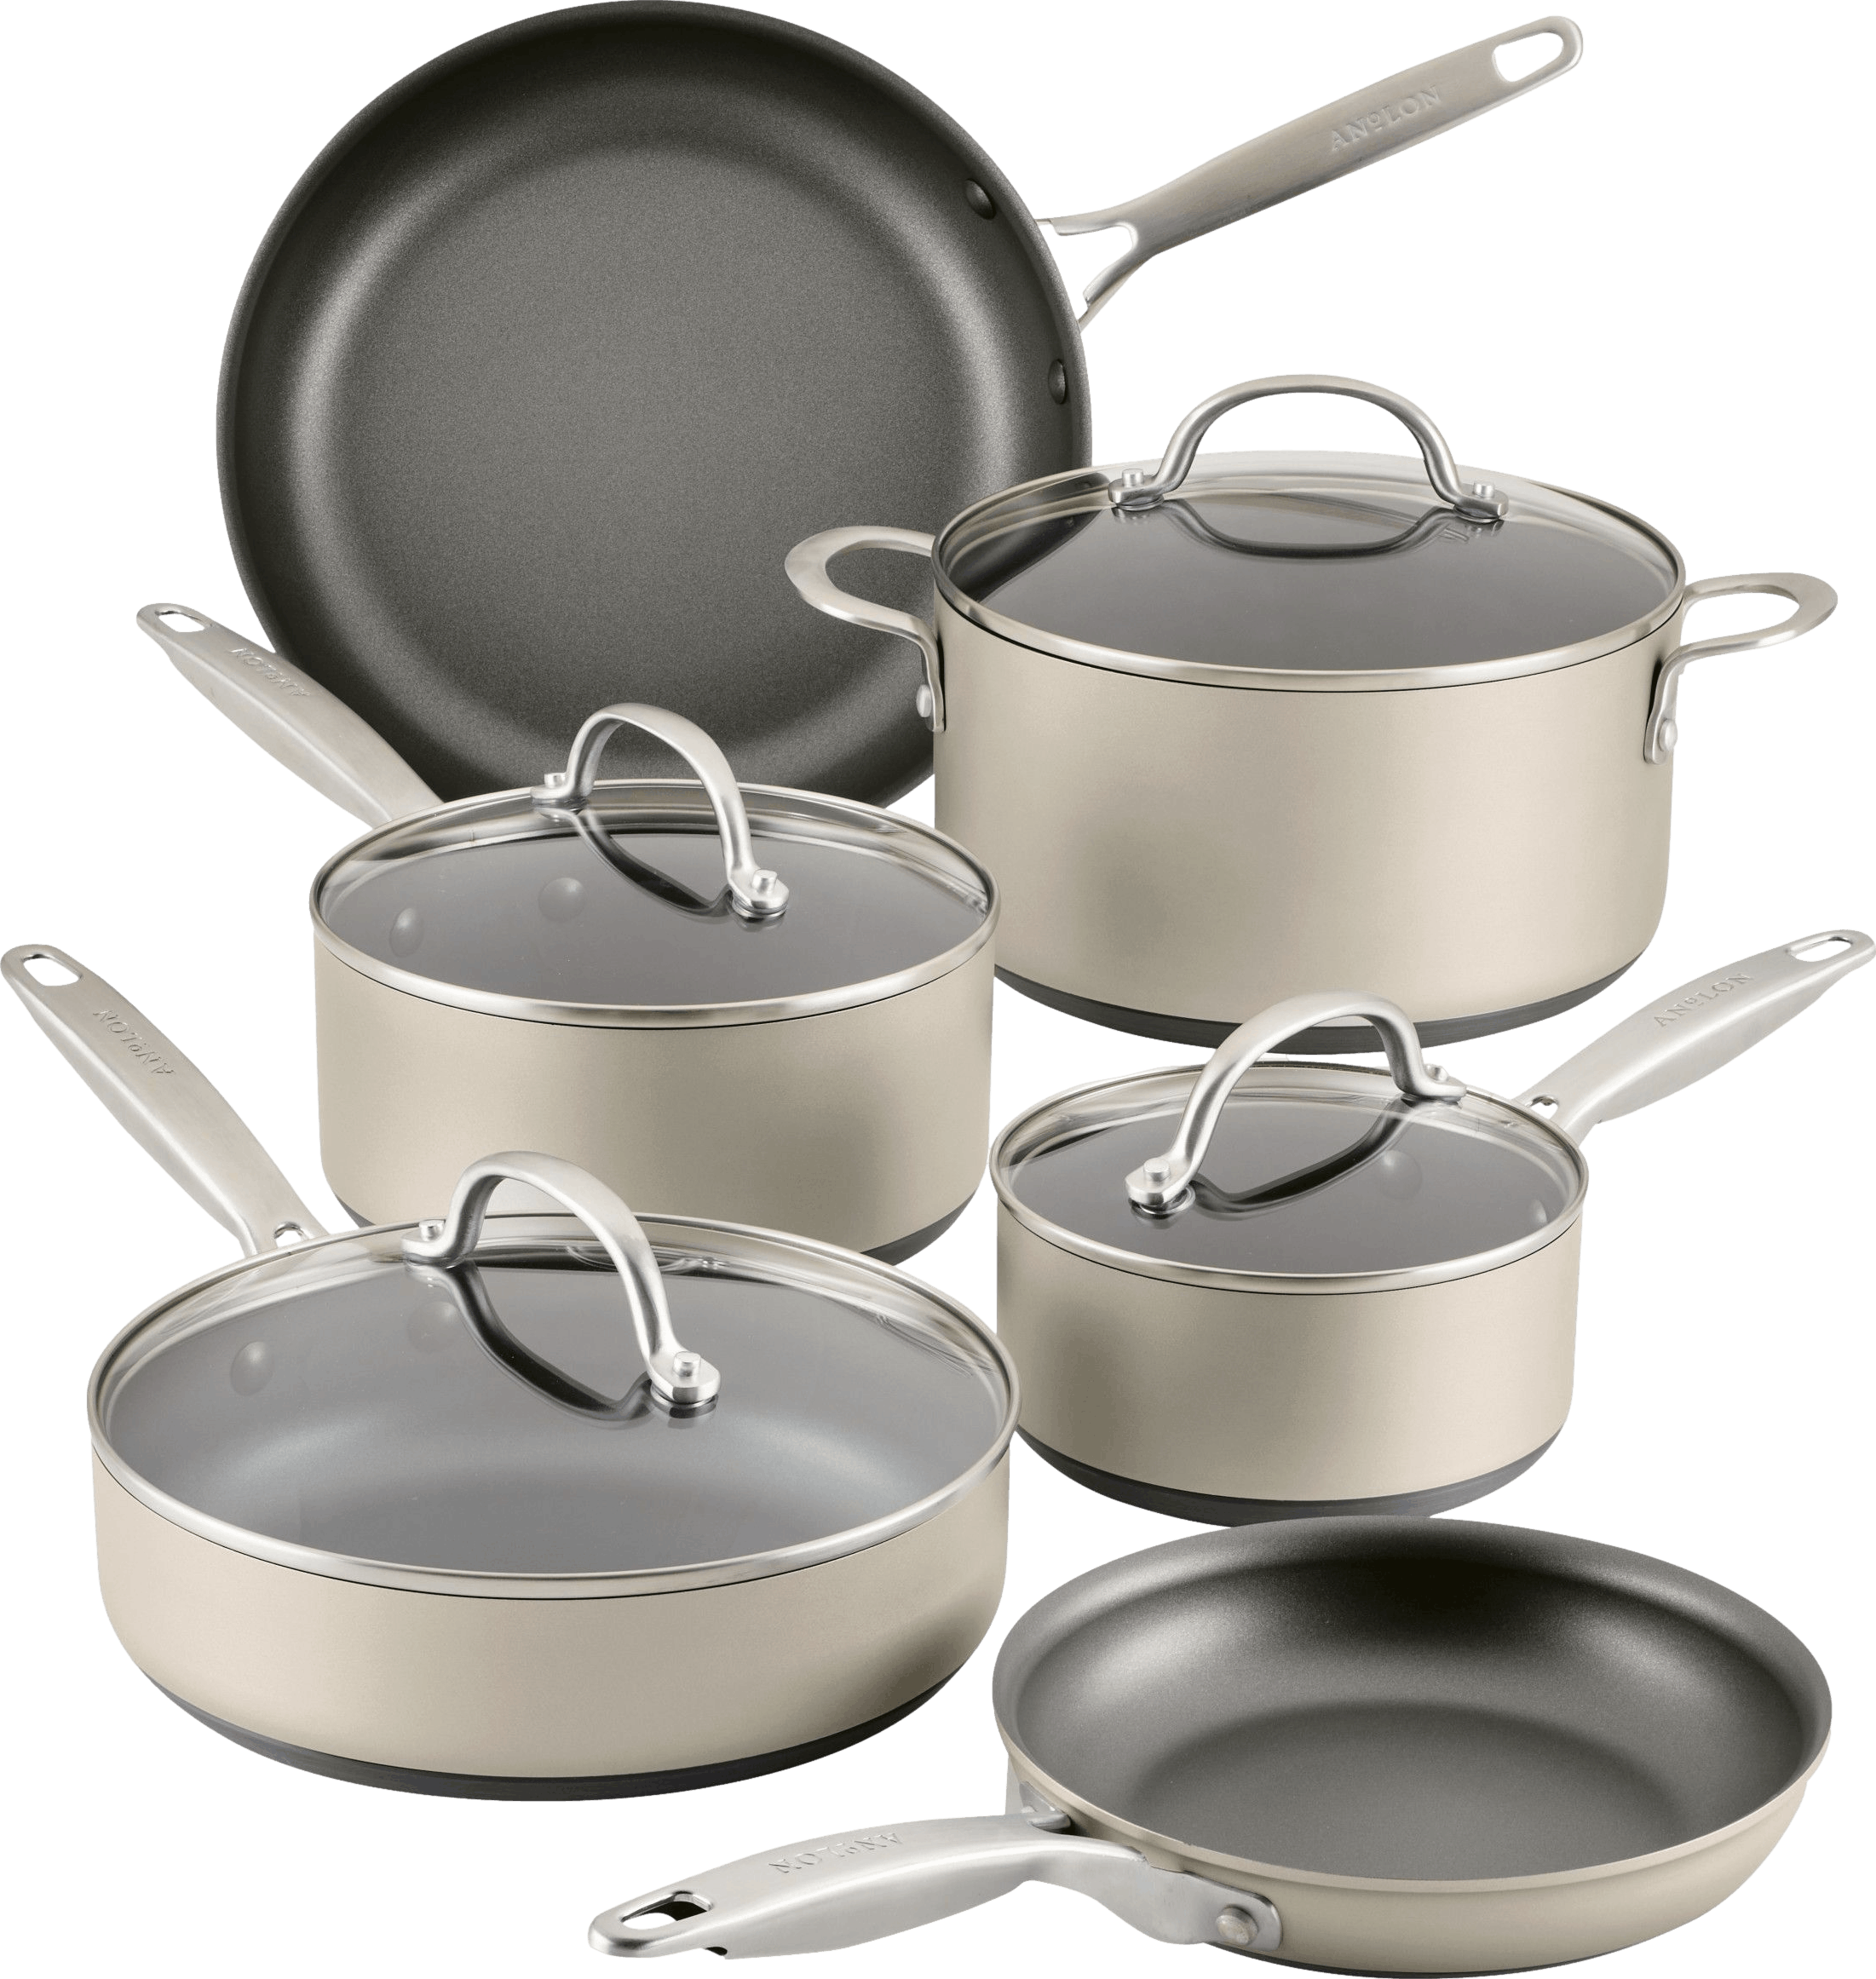 ANOLON Hard Anodized Nonstick 10 FRYING PAN Chefs Saute Fry SKILLET 2  Handles